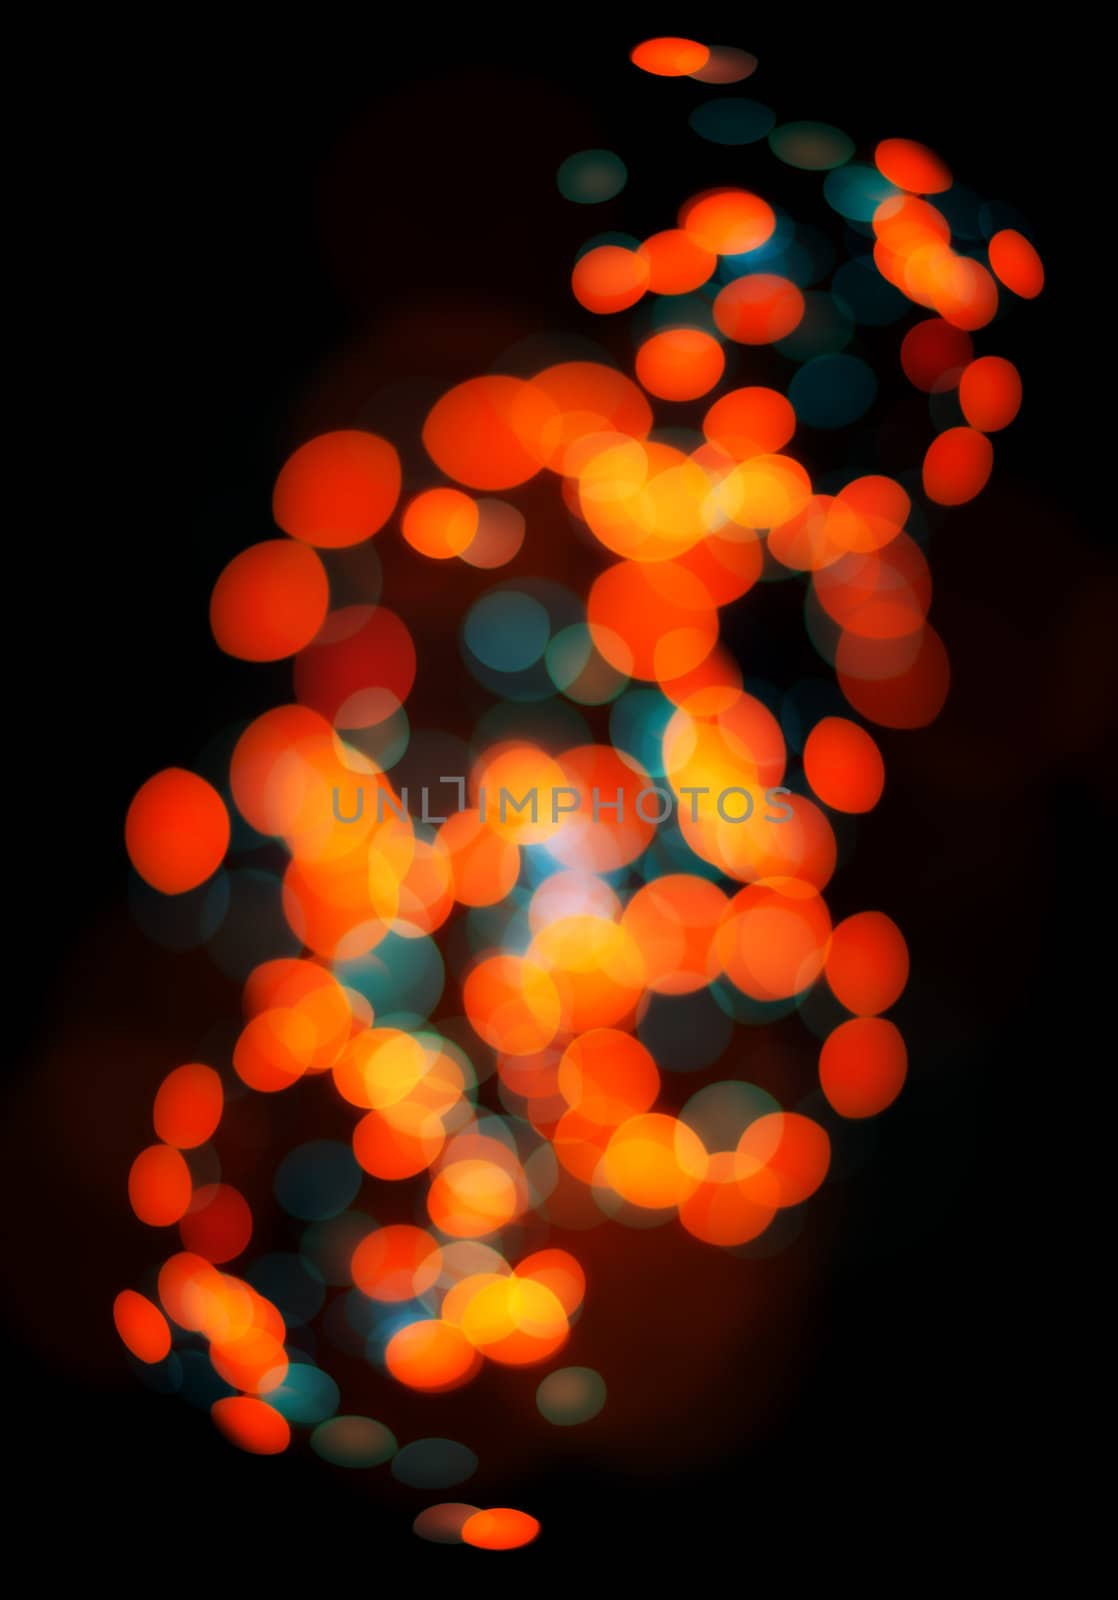 Abstract circular bokeh background of Christmas light